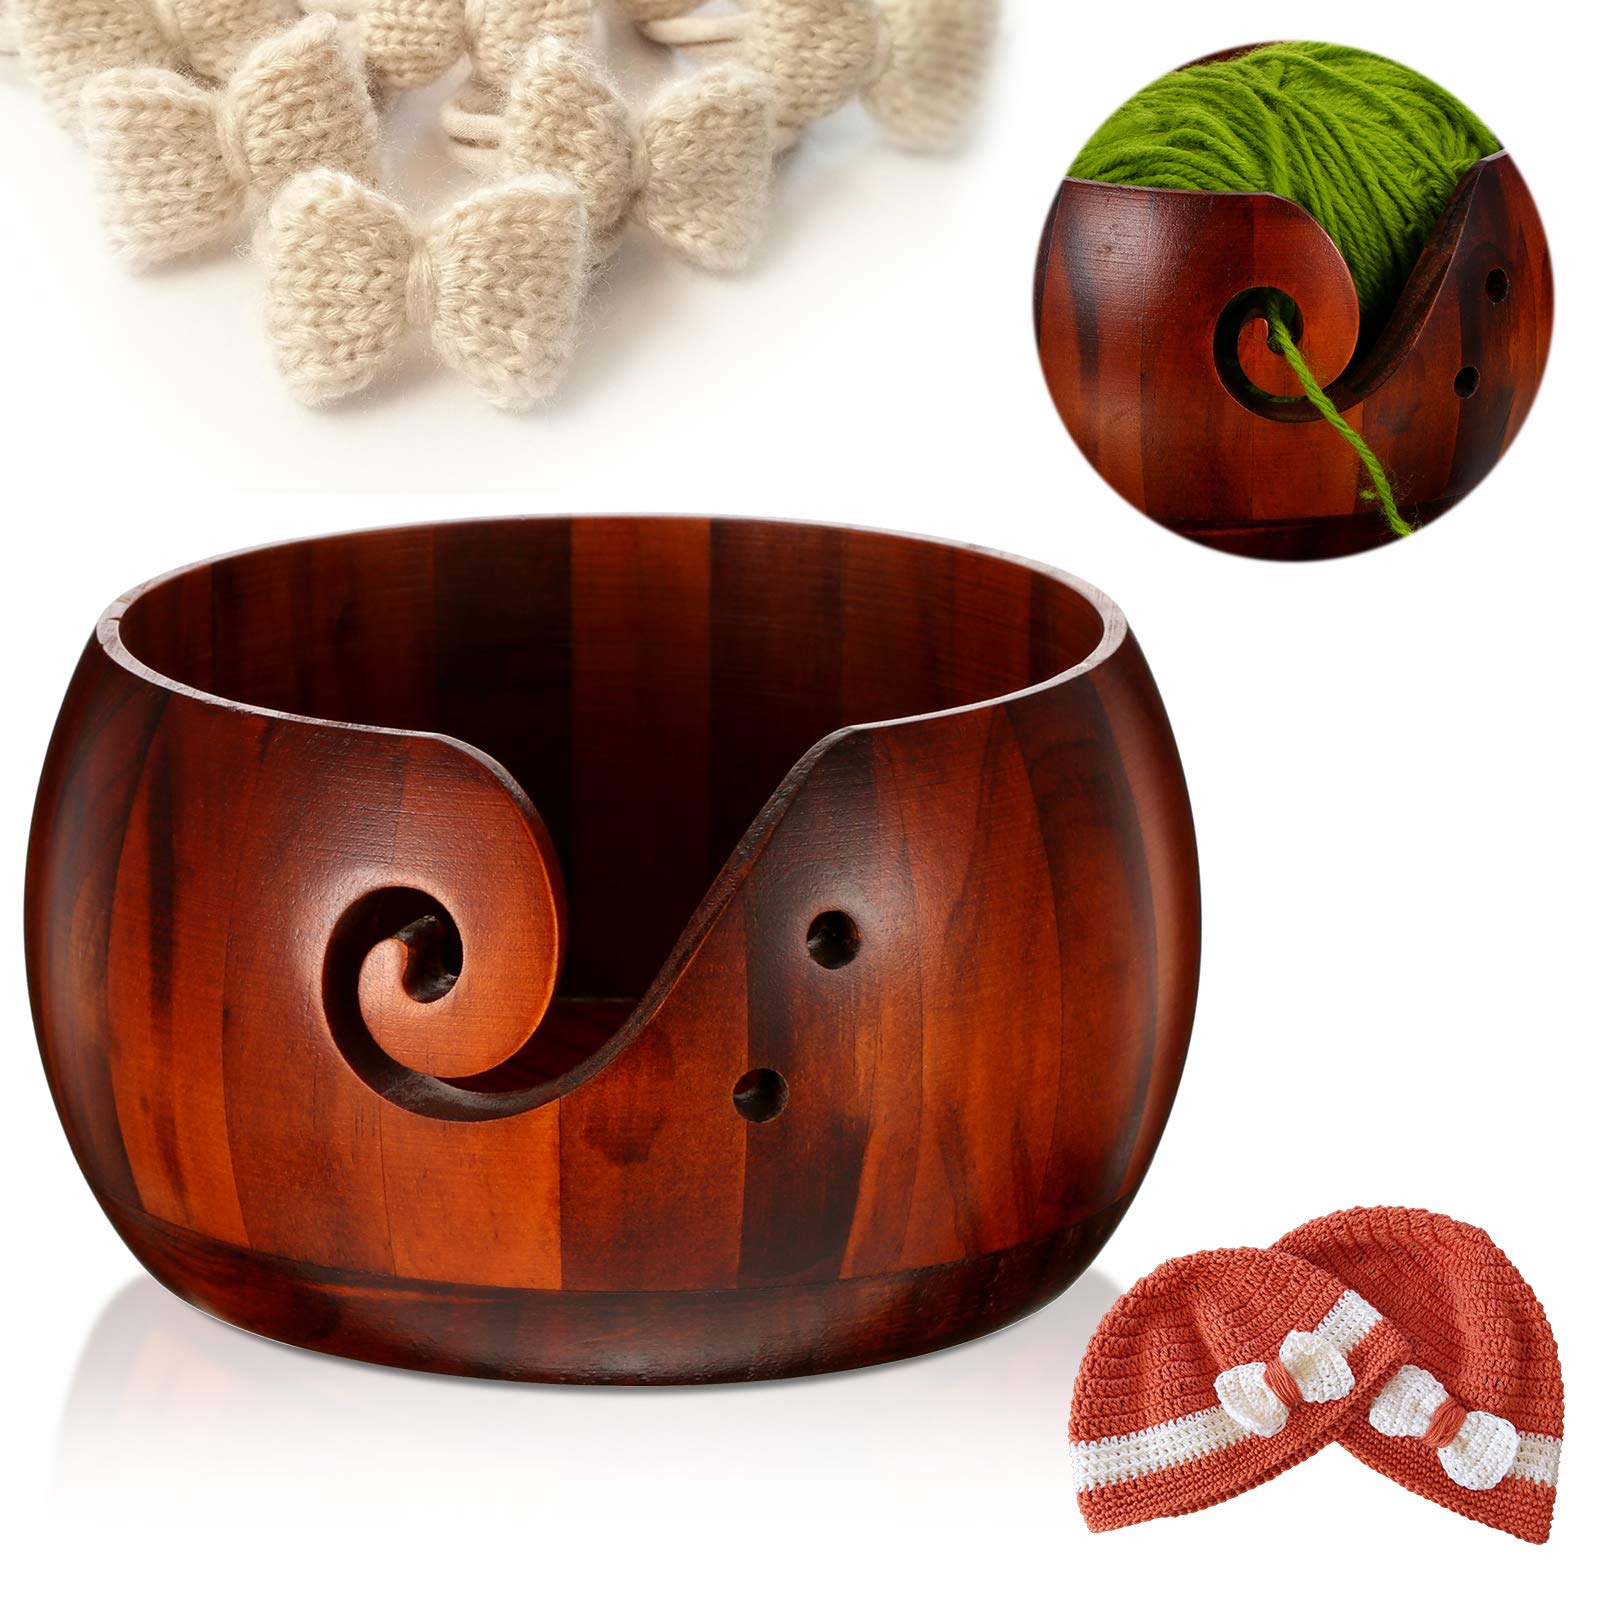 WILLBOND Wooden Yarn Bowl, 6 x 3 Inches Knitting Yarn Bowls with